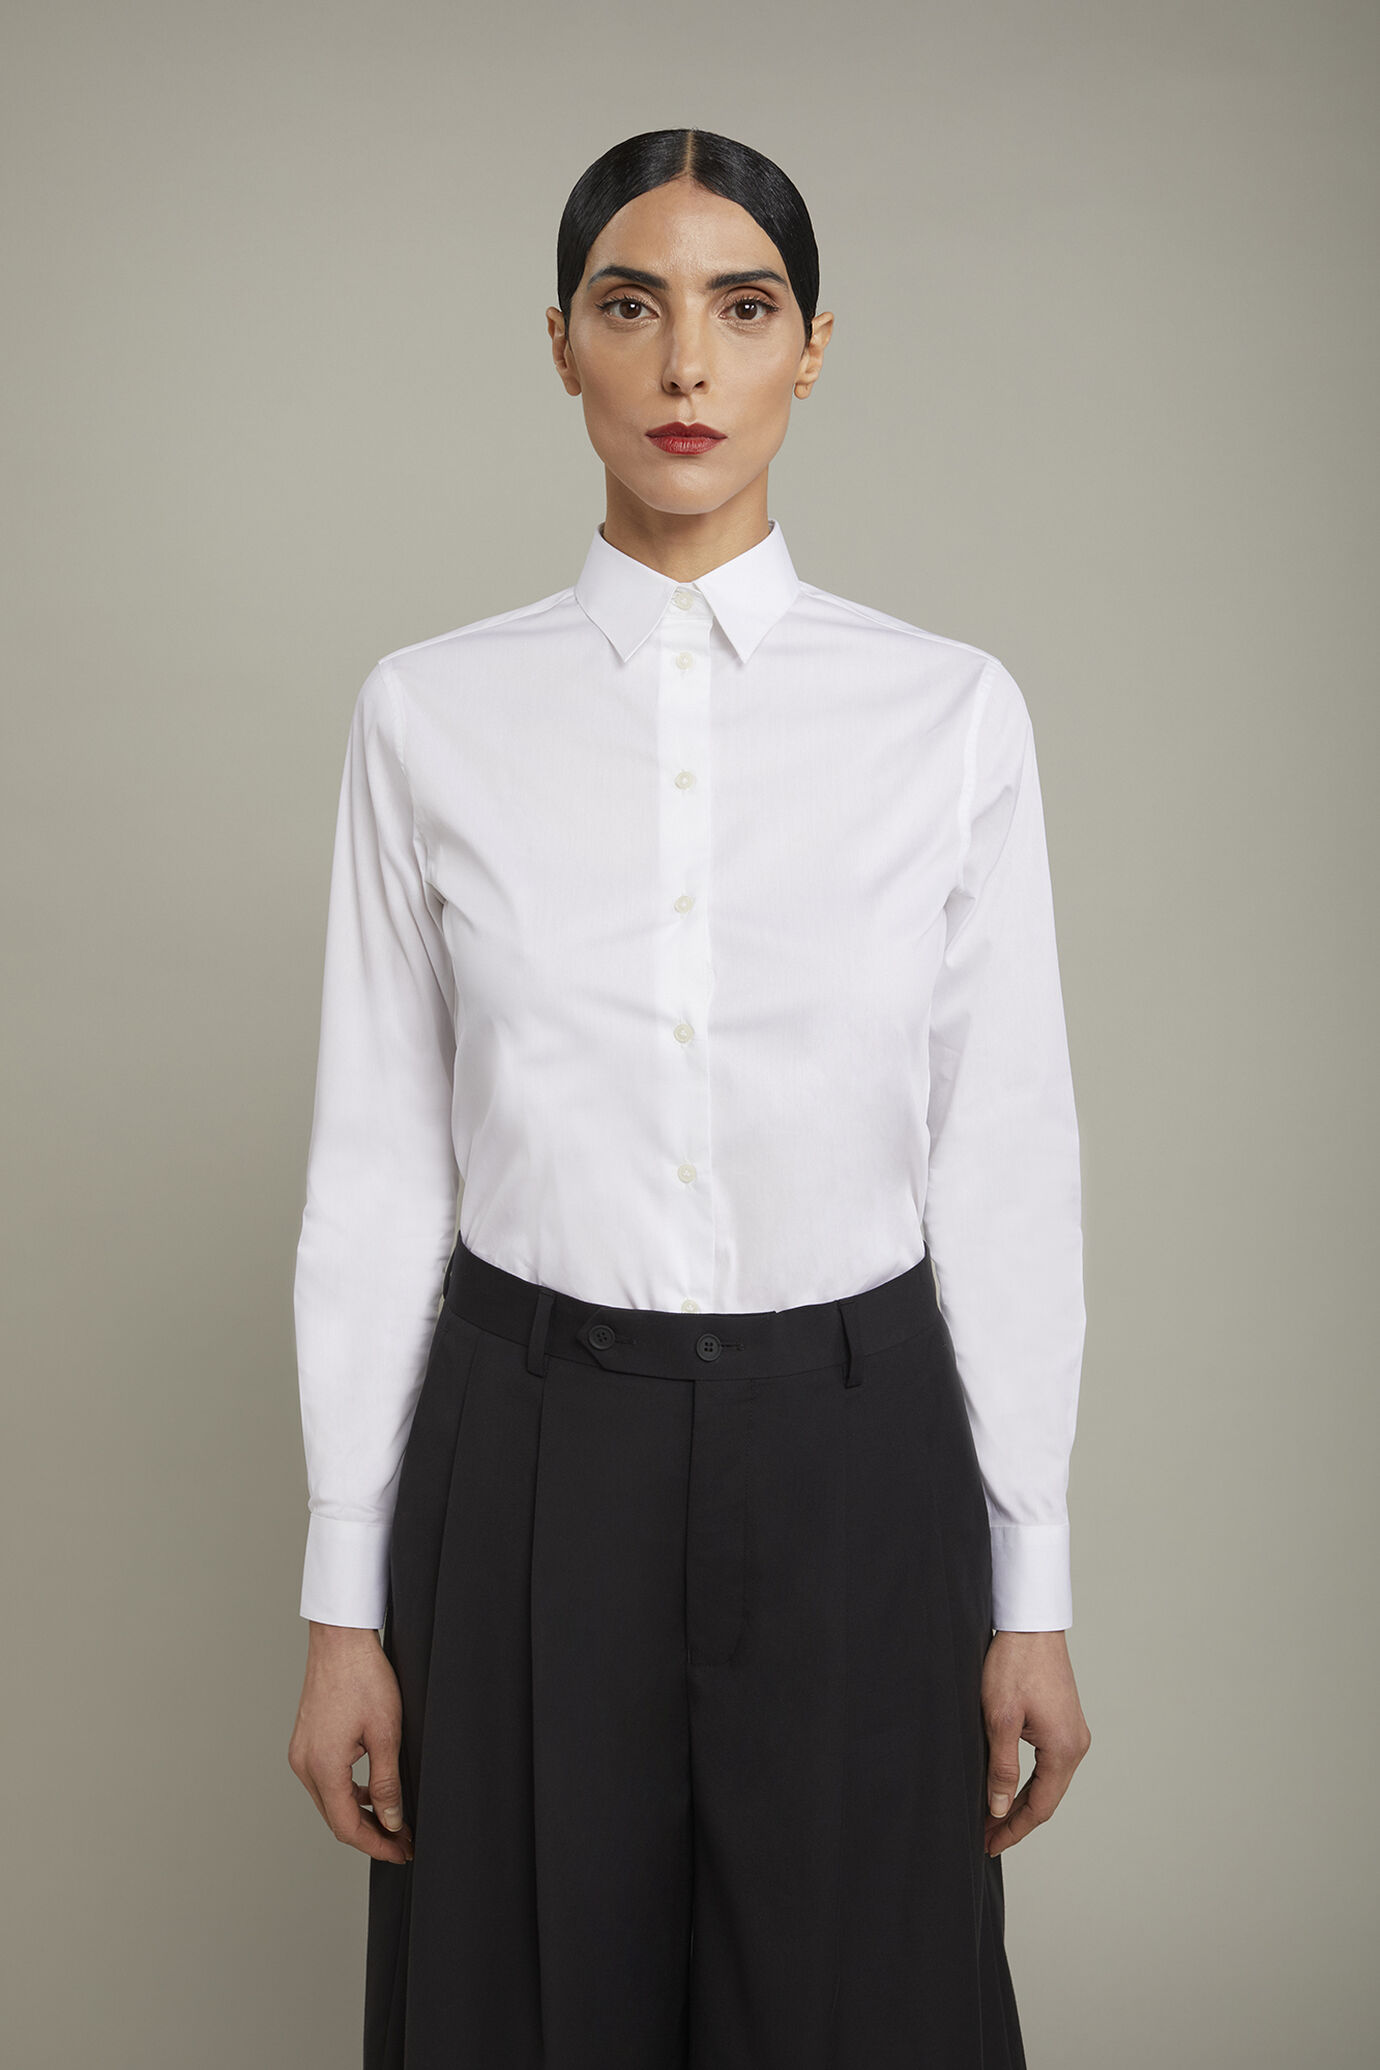 Women's classic solid color stretch cotton shirt